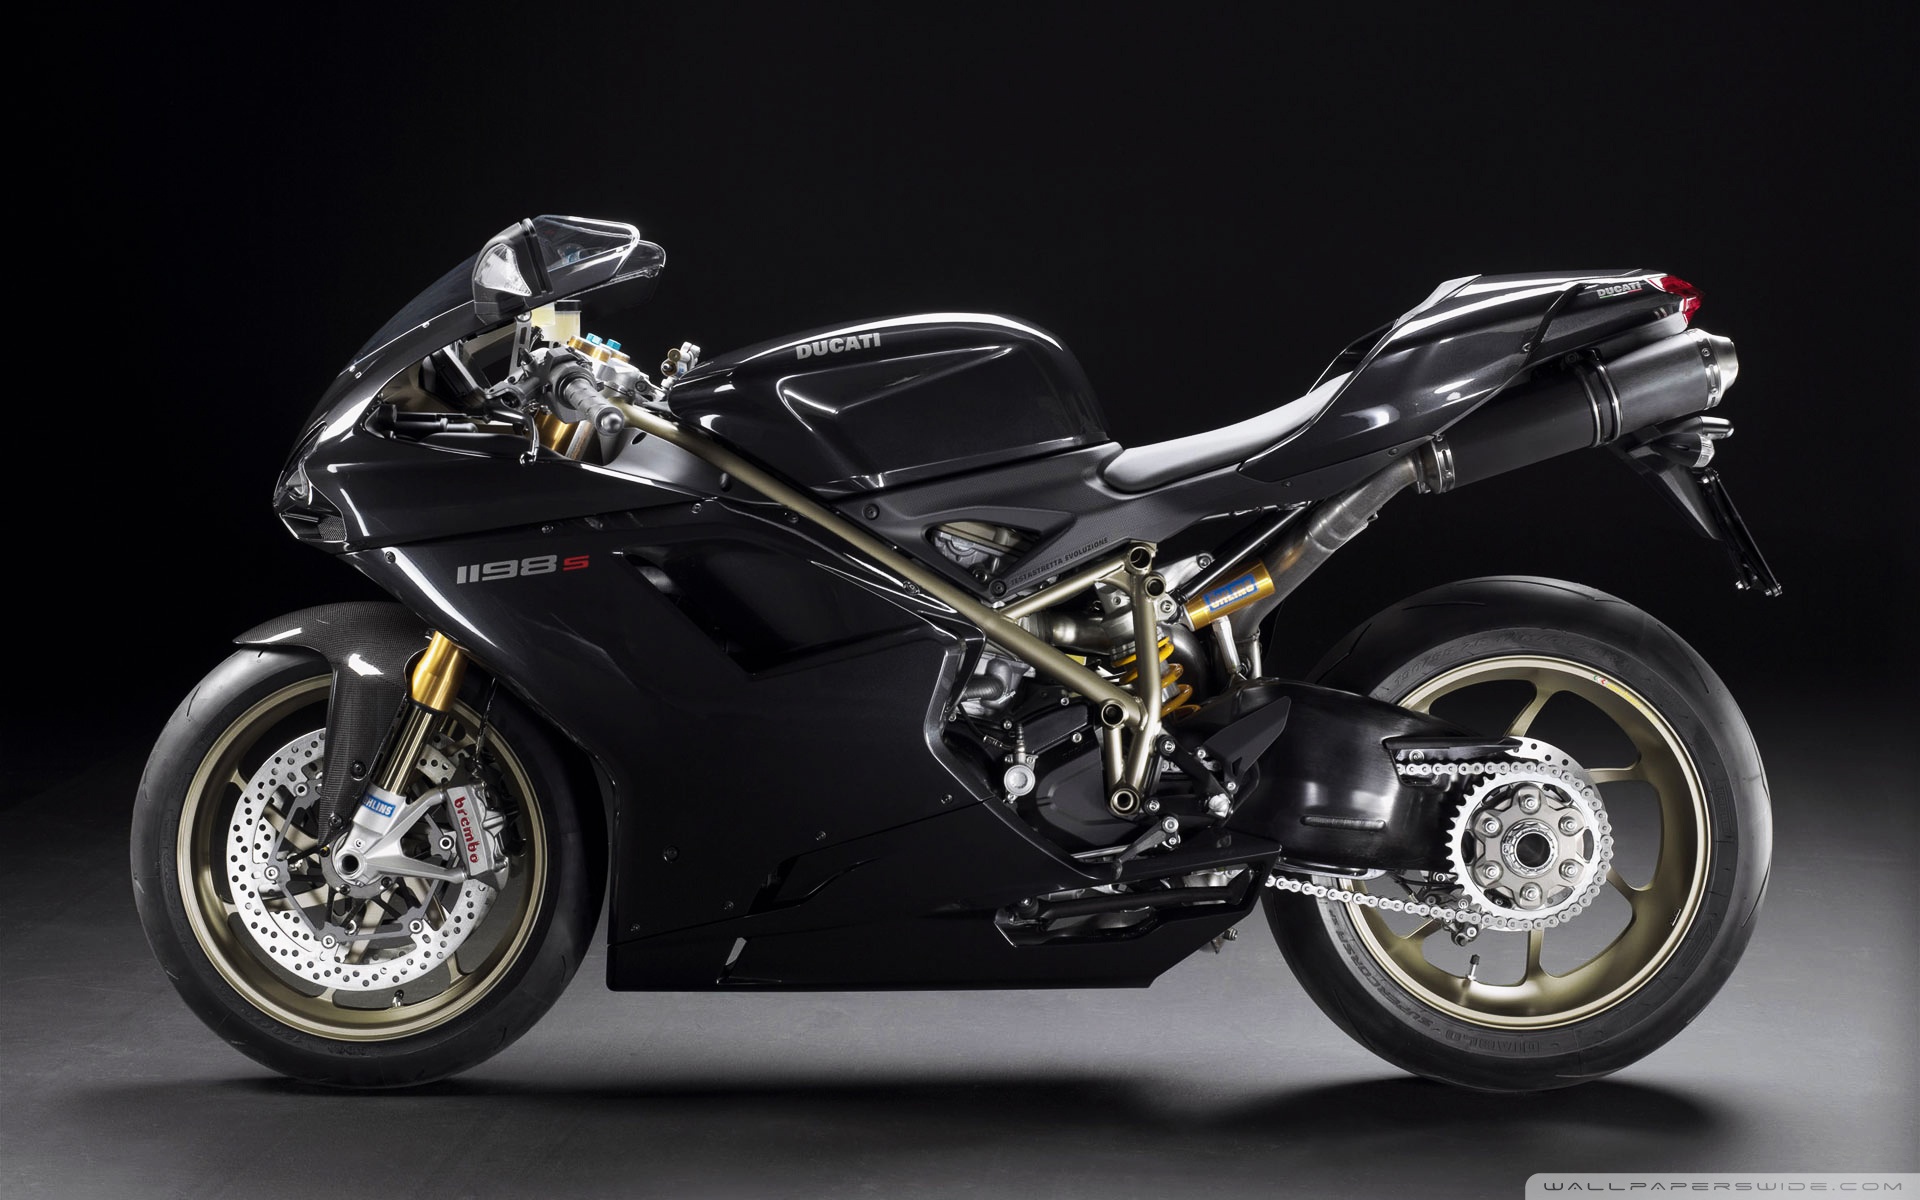 Топовые мотоциклы. Ducati Superbike 1198 s. Ducati 1198. Дукати мотоцикл 1198. Самый дорогой мотоцикл Дукати.